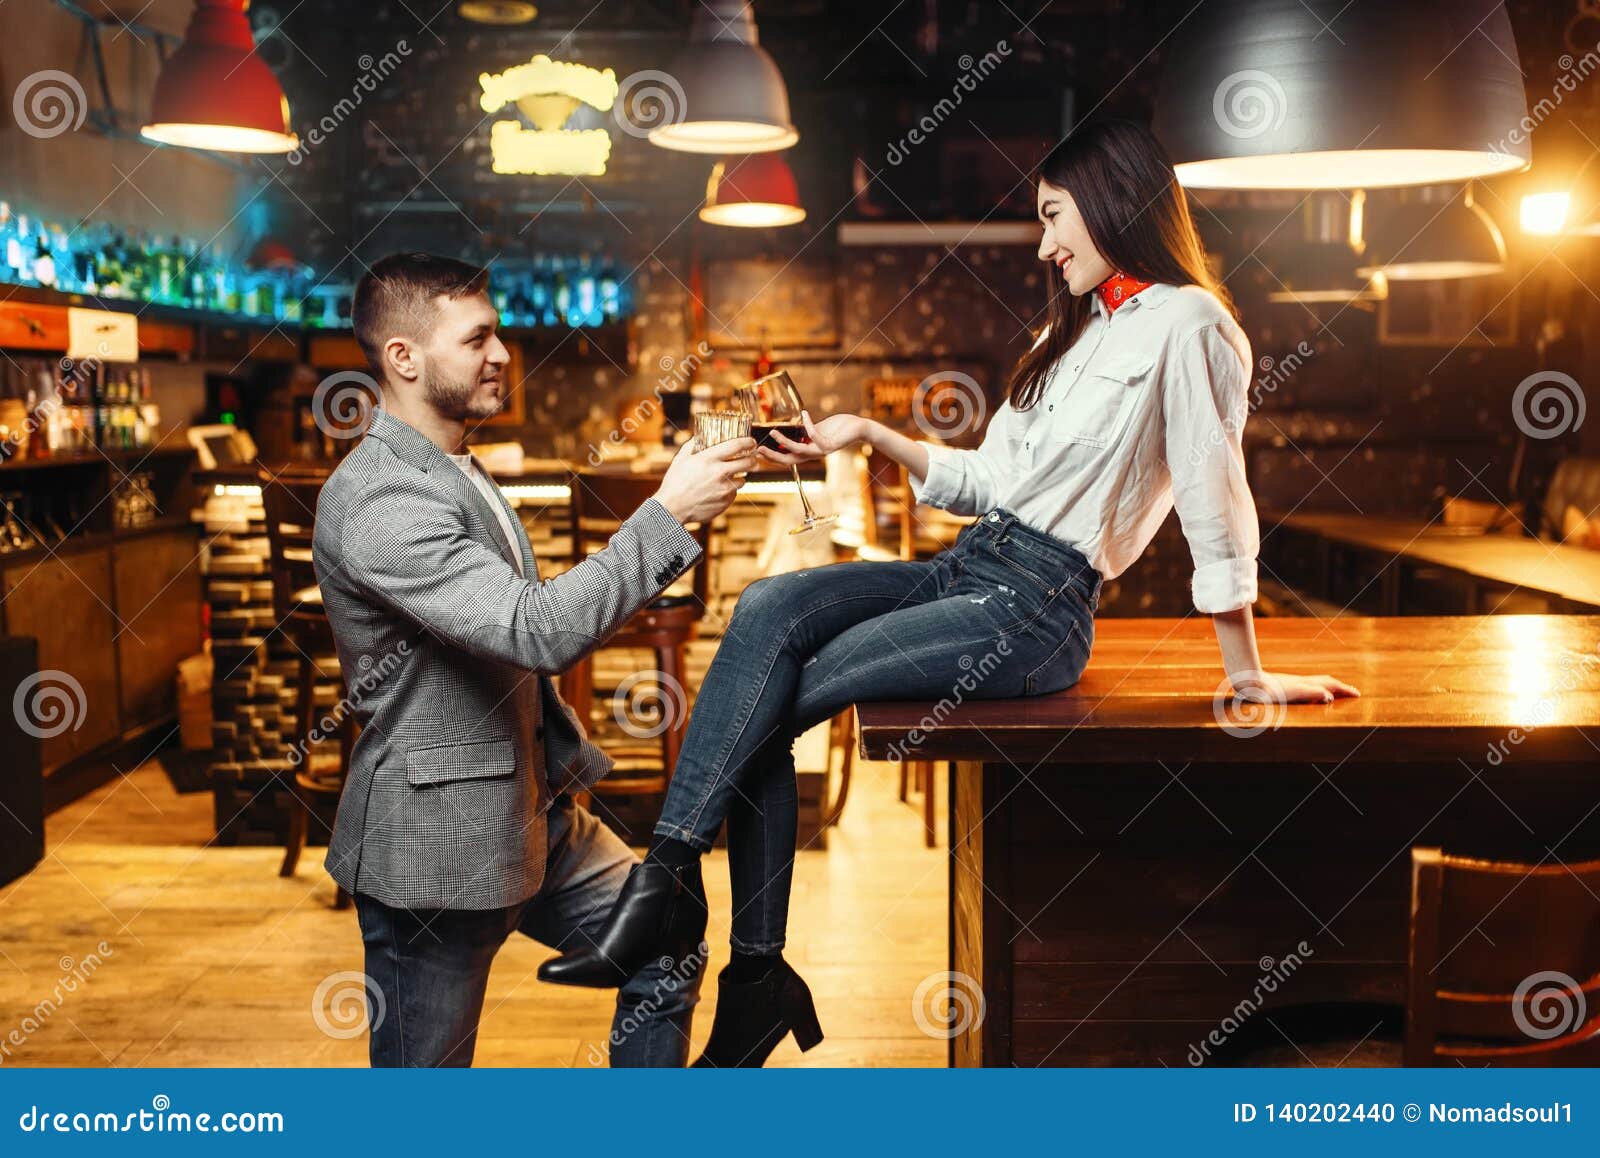 woman flirting with man, couple at bar counter